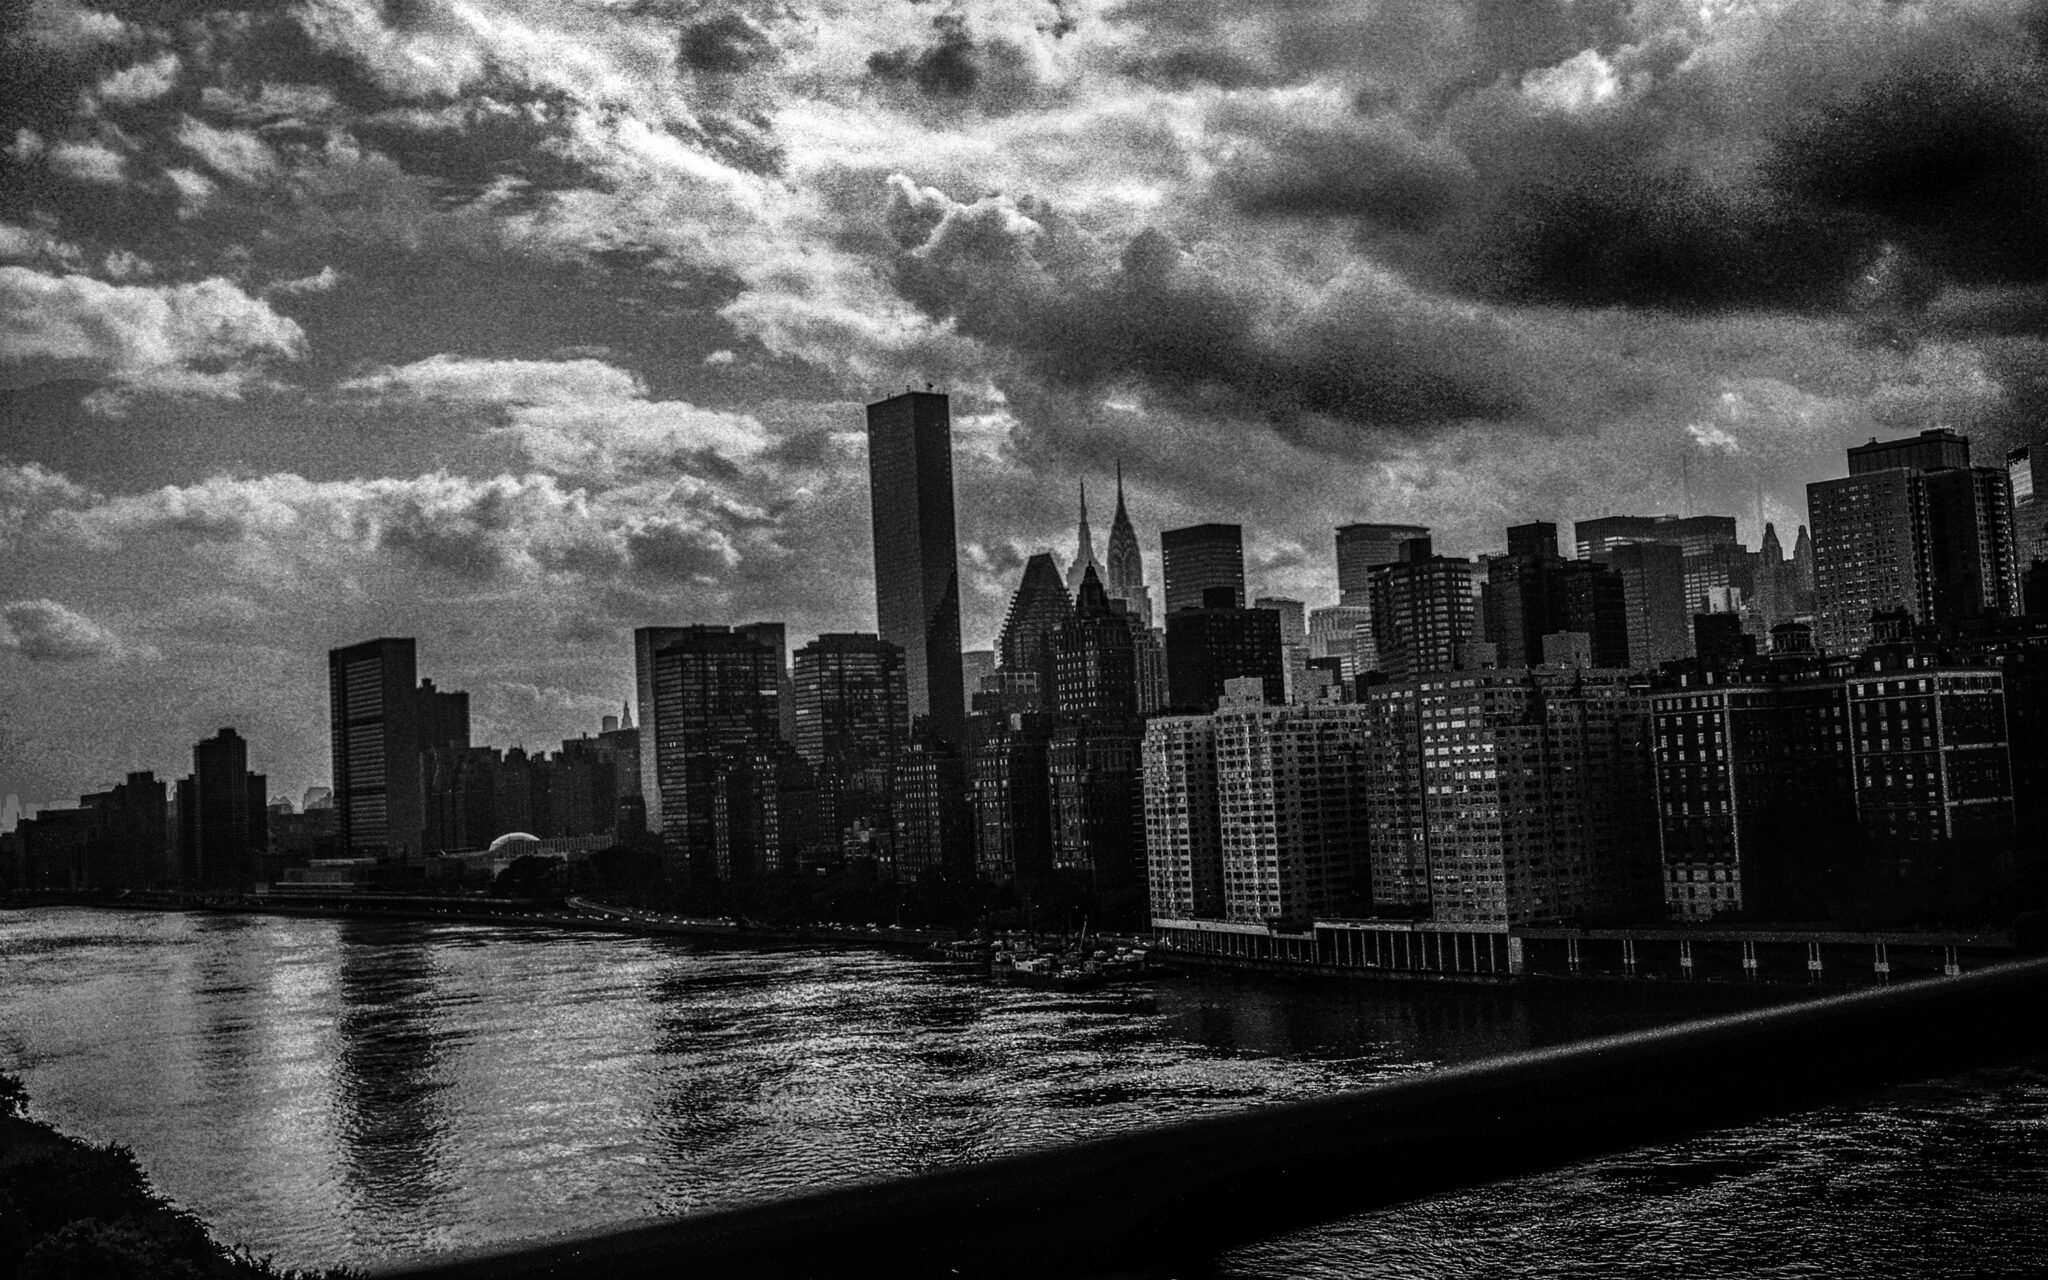 Photograph of the Manhattan Skyline